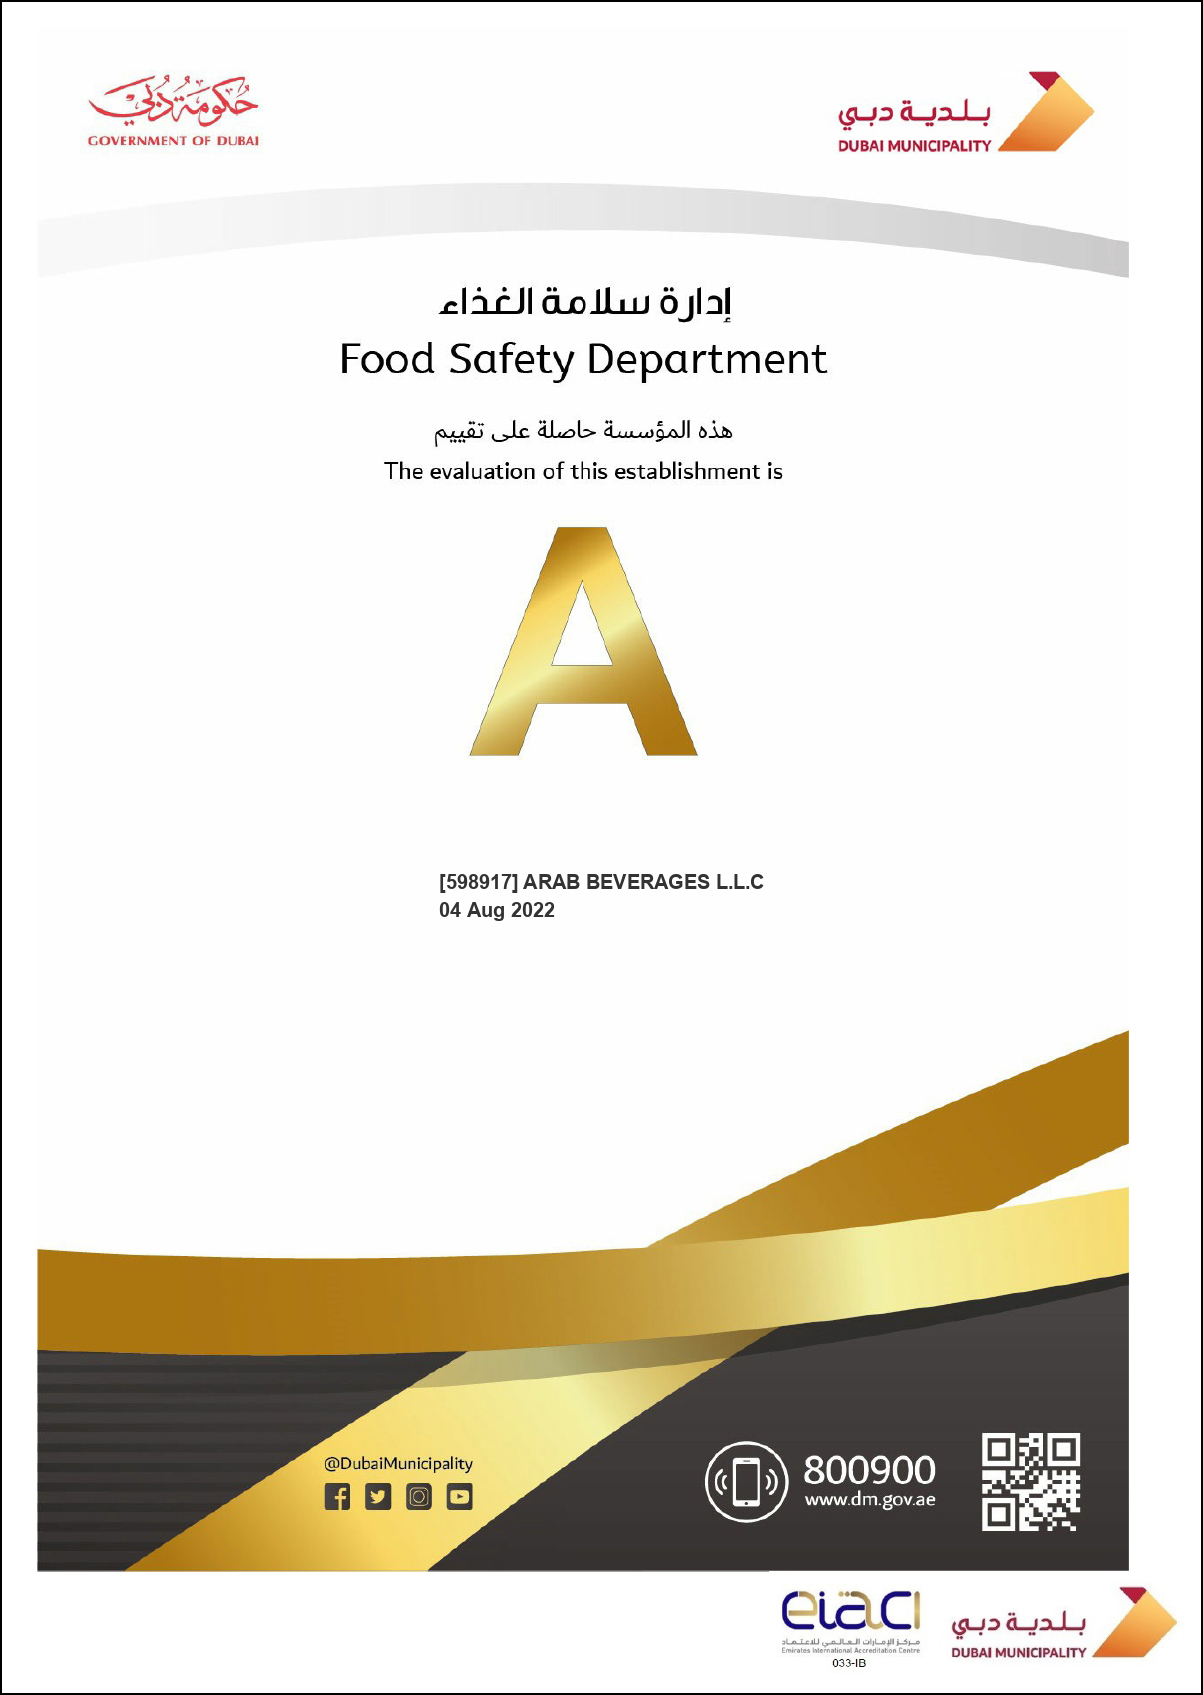 //www.arabbeverages.com/wp-content/uploads/2022/10/Certificate-Dubai-Municipality-29.jpg